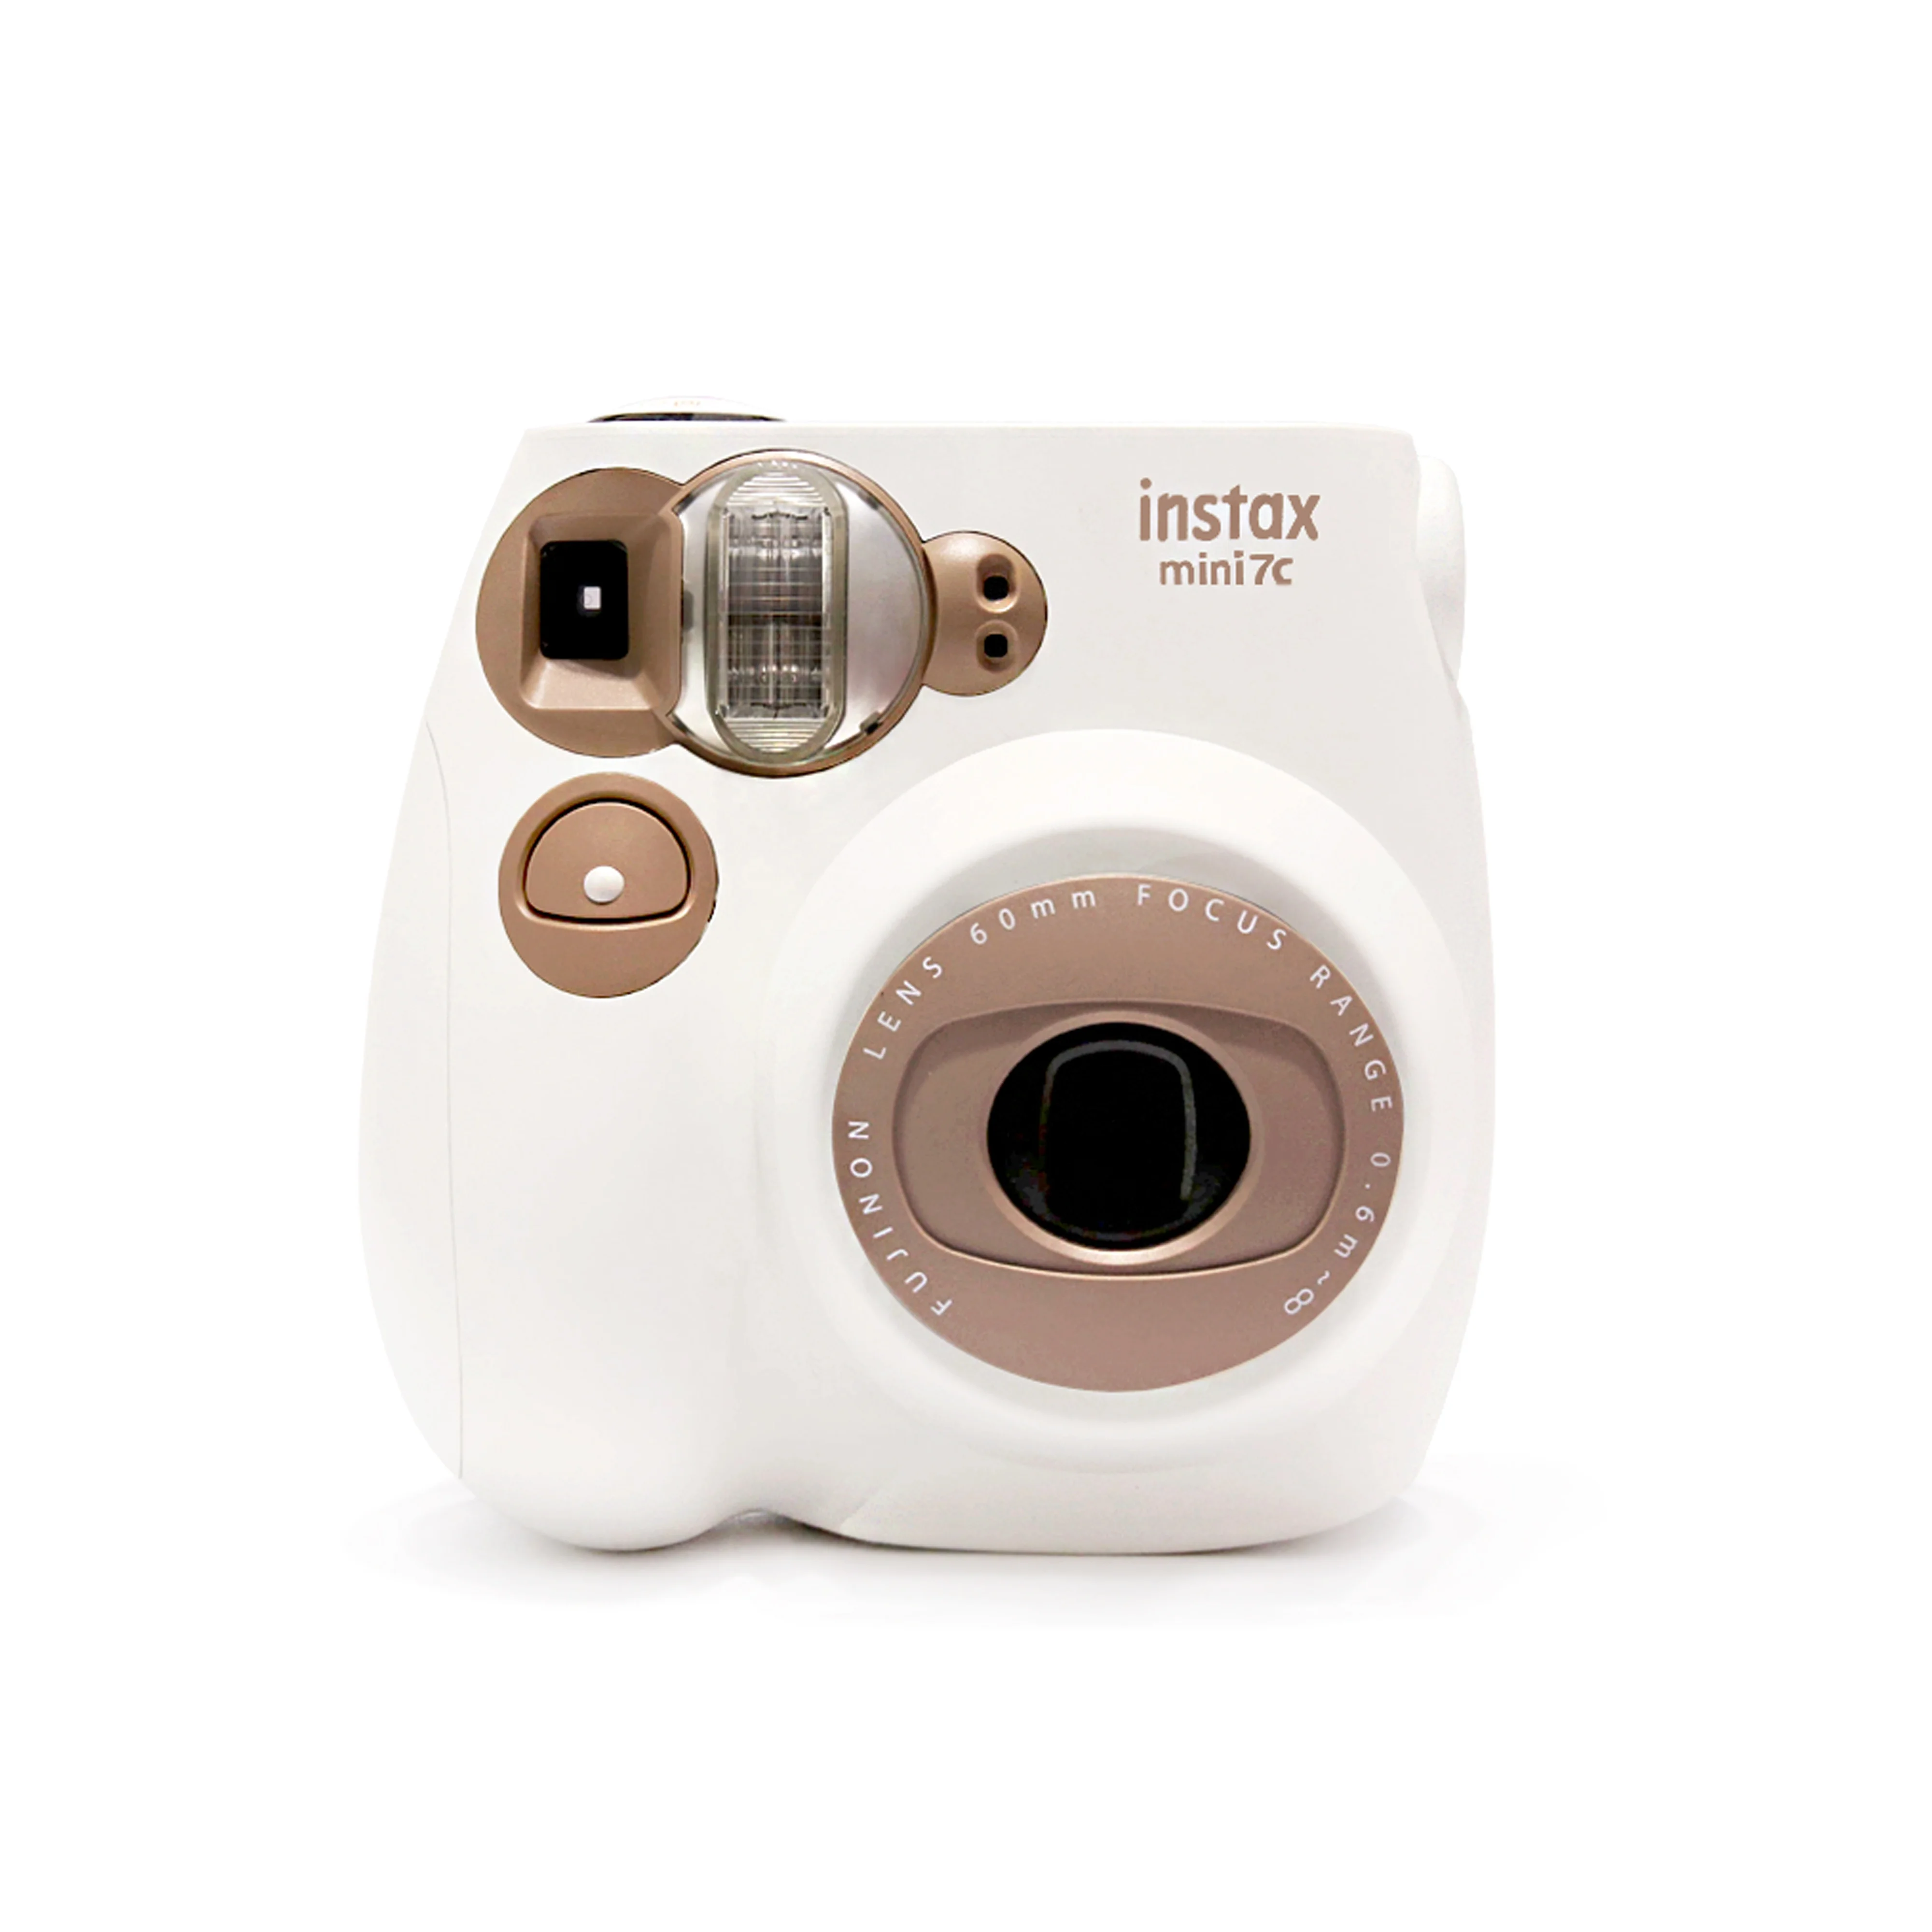 

Hot Best Instant Mini instax camera,fujifilm instax mini 7c instant camera (Milk and Chocolate), Request